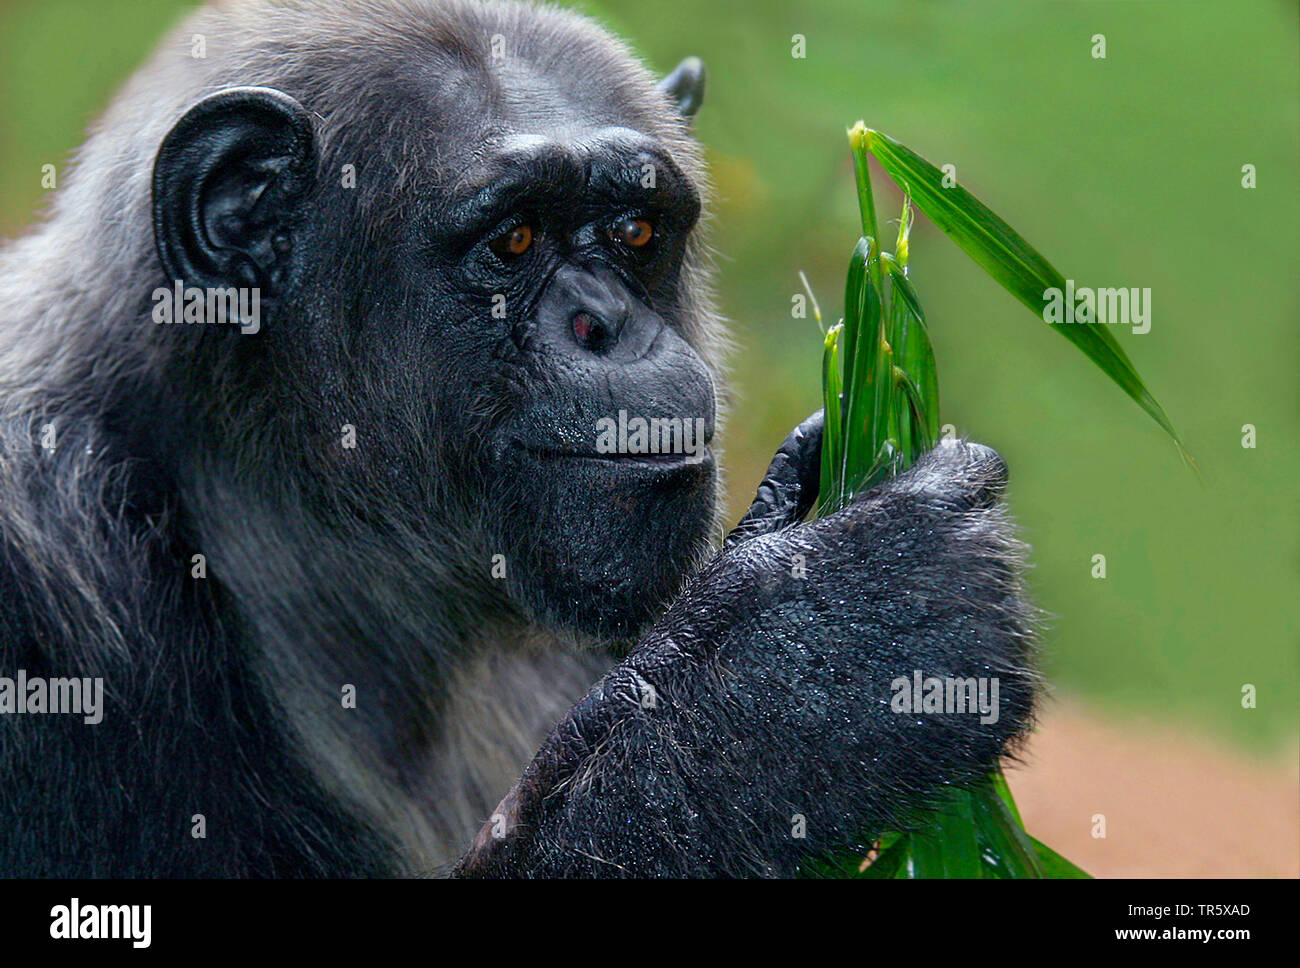 common chimpanzee (Pan troglodytes), portrait, examing parts of plant Stock Photo